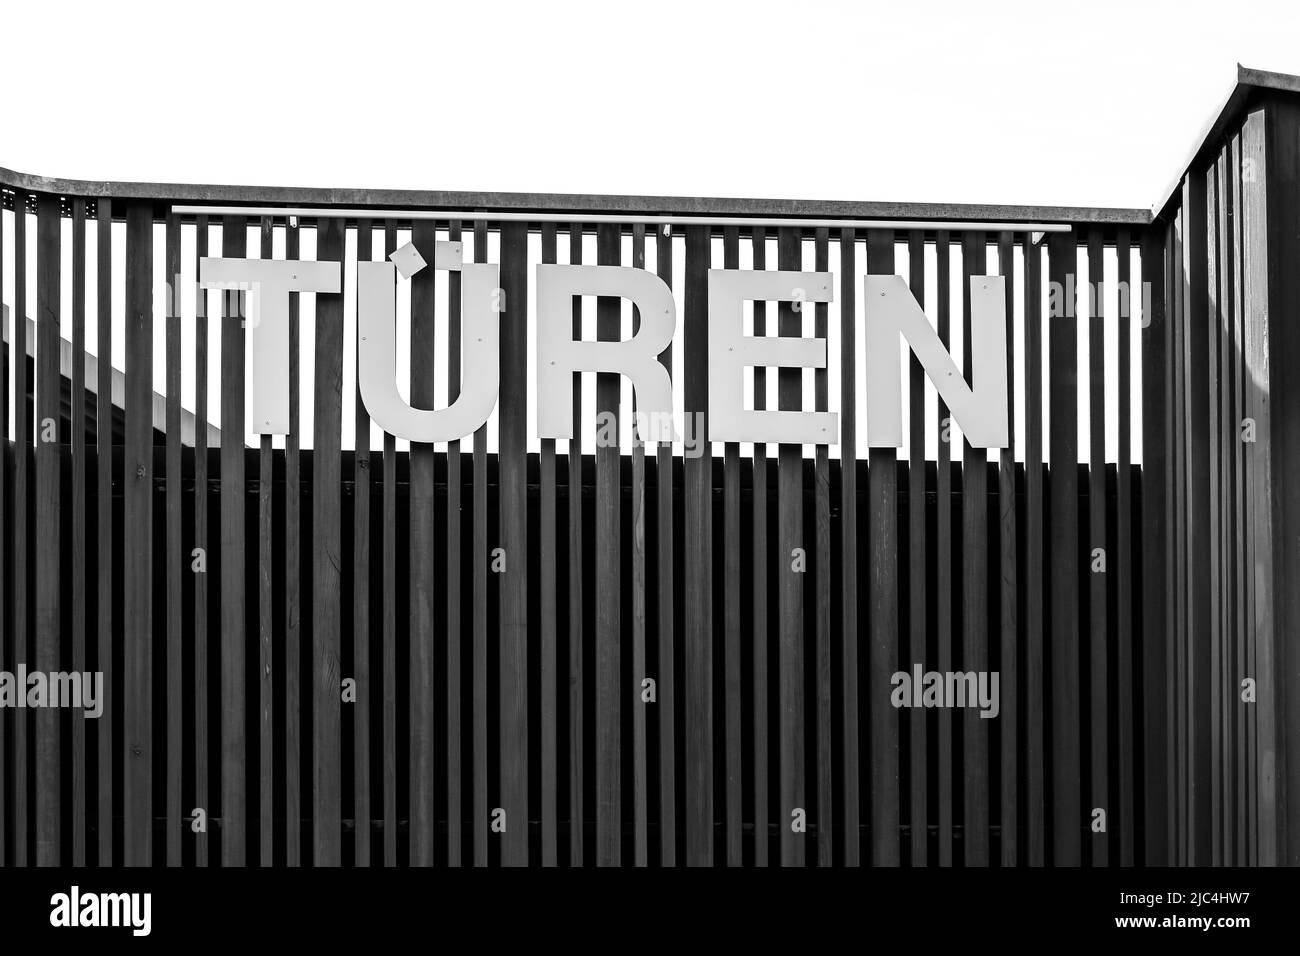 Portes en lettrage sur palissade en bois, lettres, photo noir et blanc, Reutlingen, Bade-Wurtemberg, Allemagne Banque D'Images